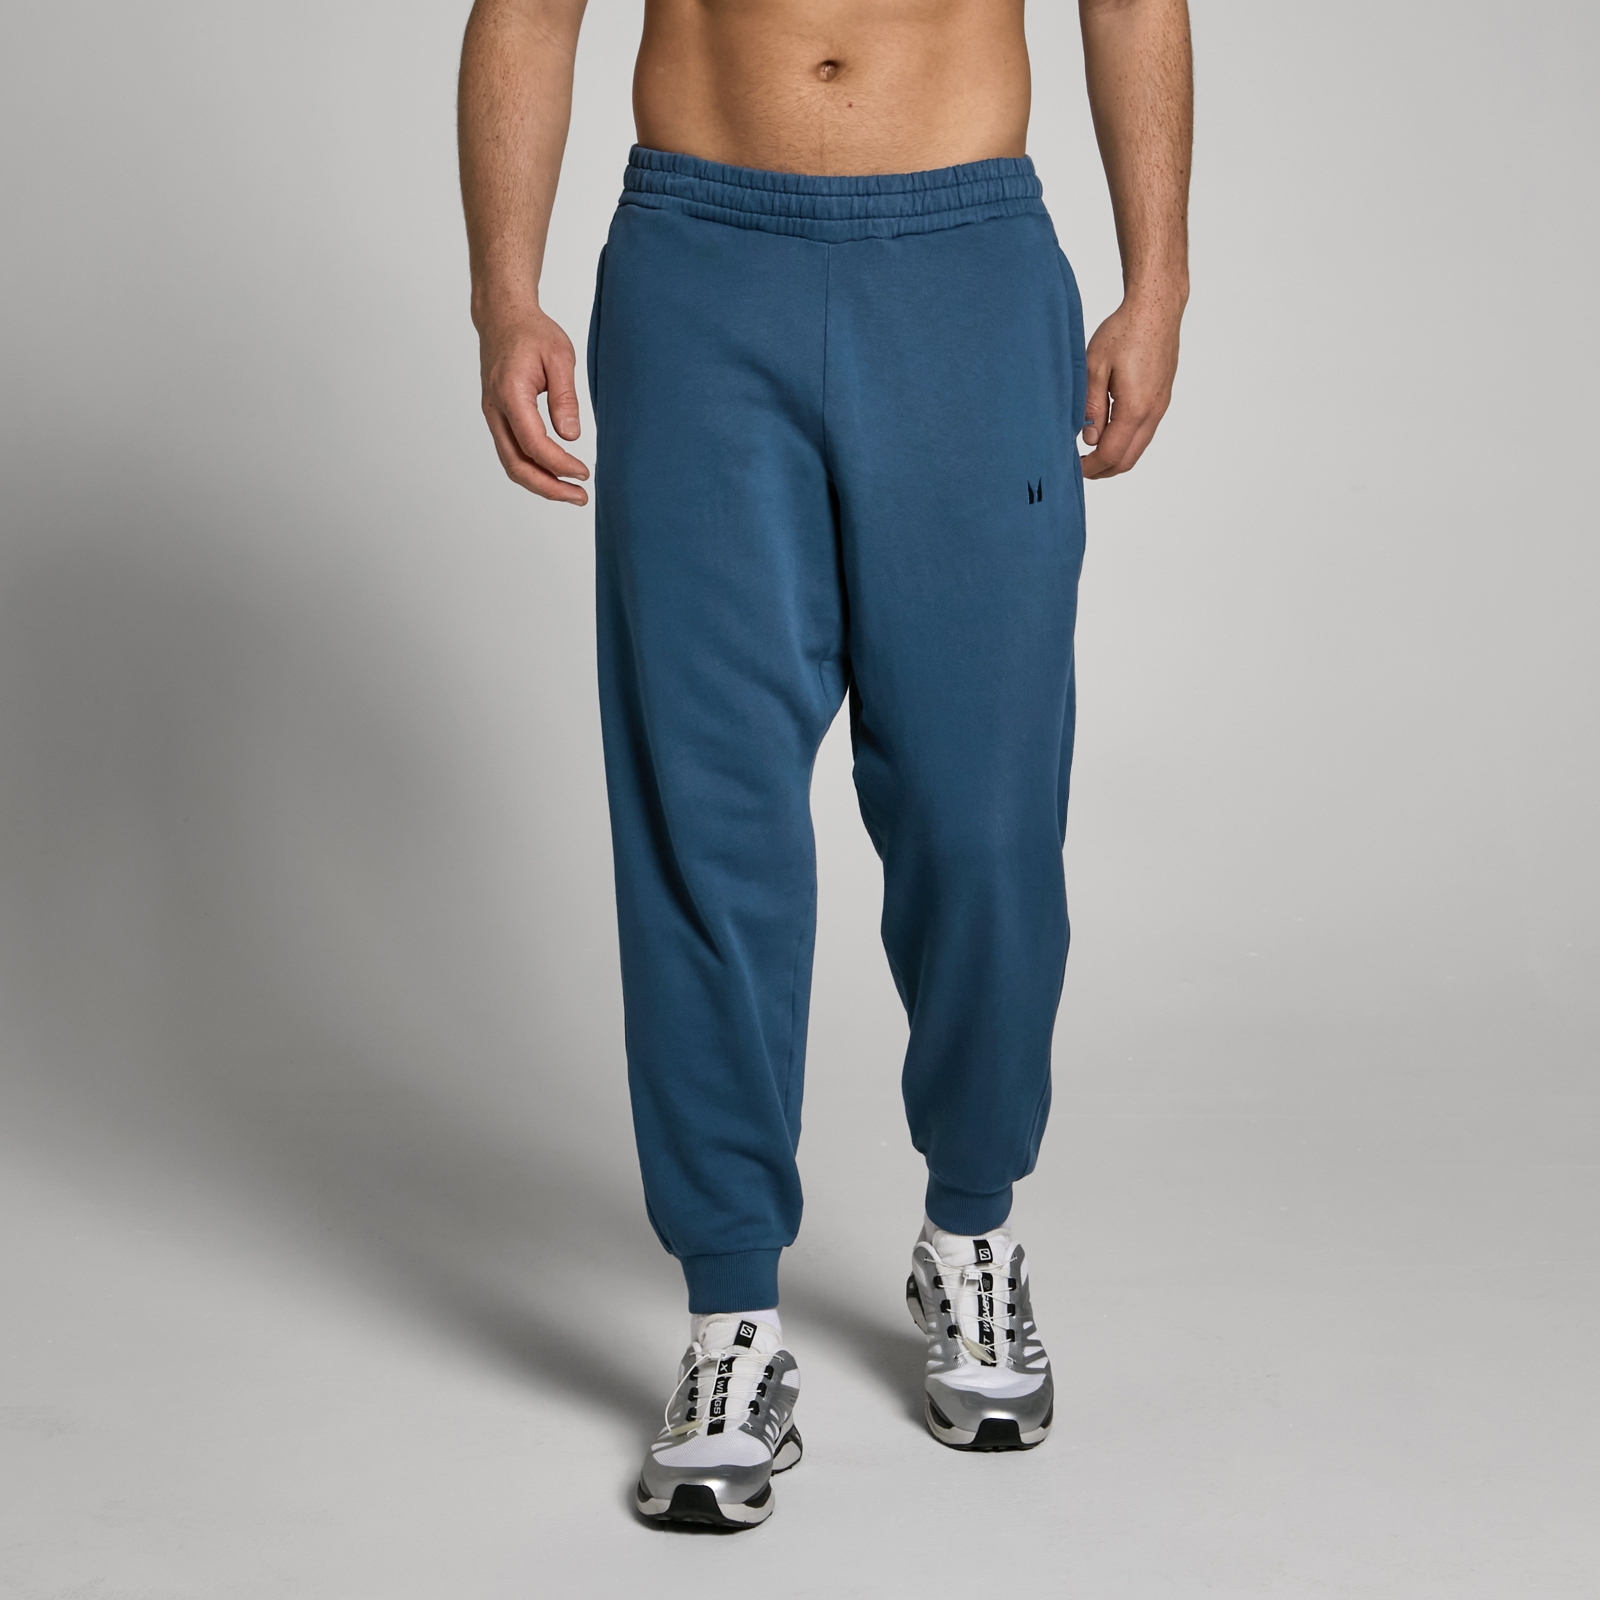 Image of Pantaloni da jogging slavati MP Tempo da uomo - Blu navy slavato - XXL